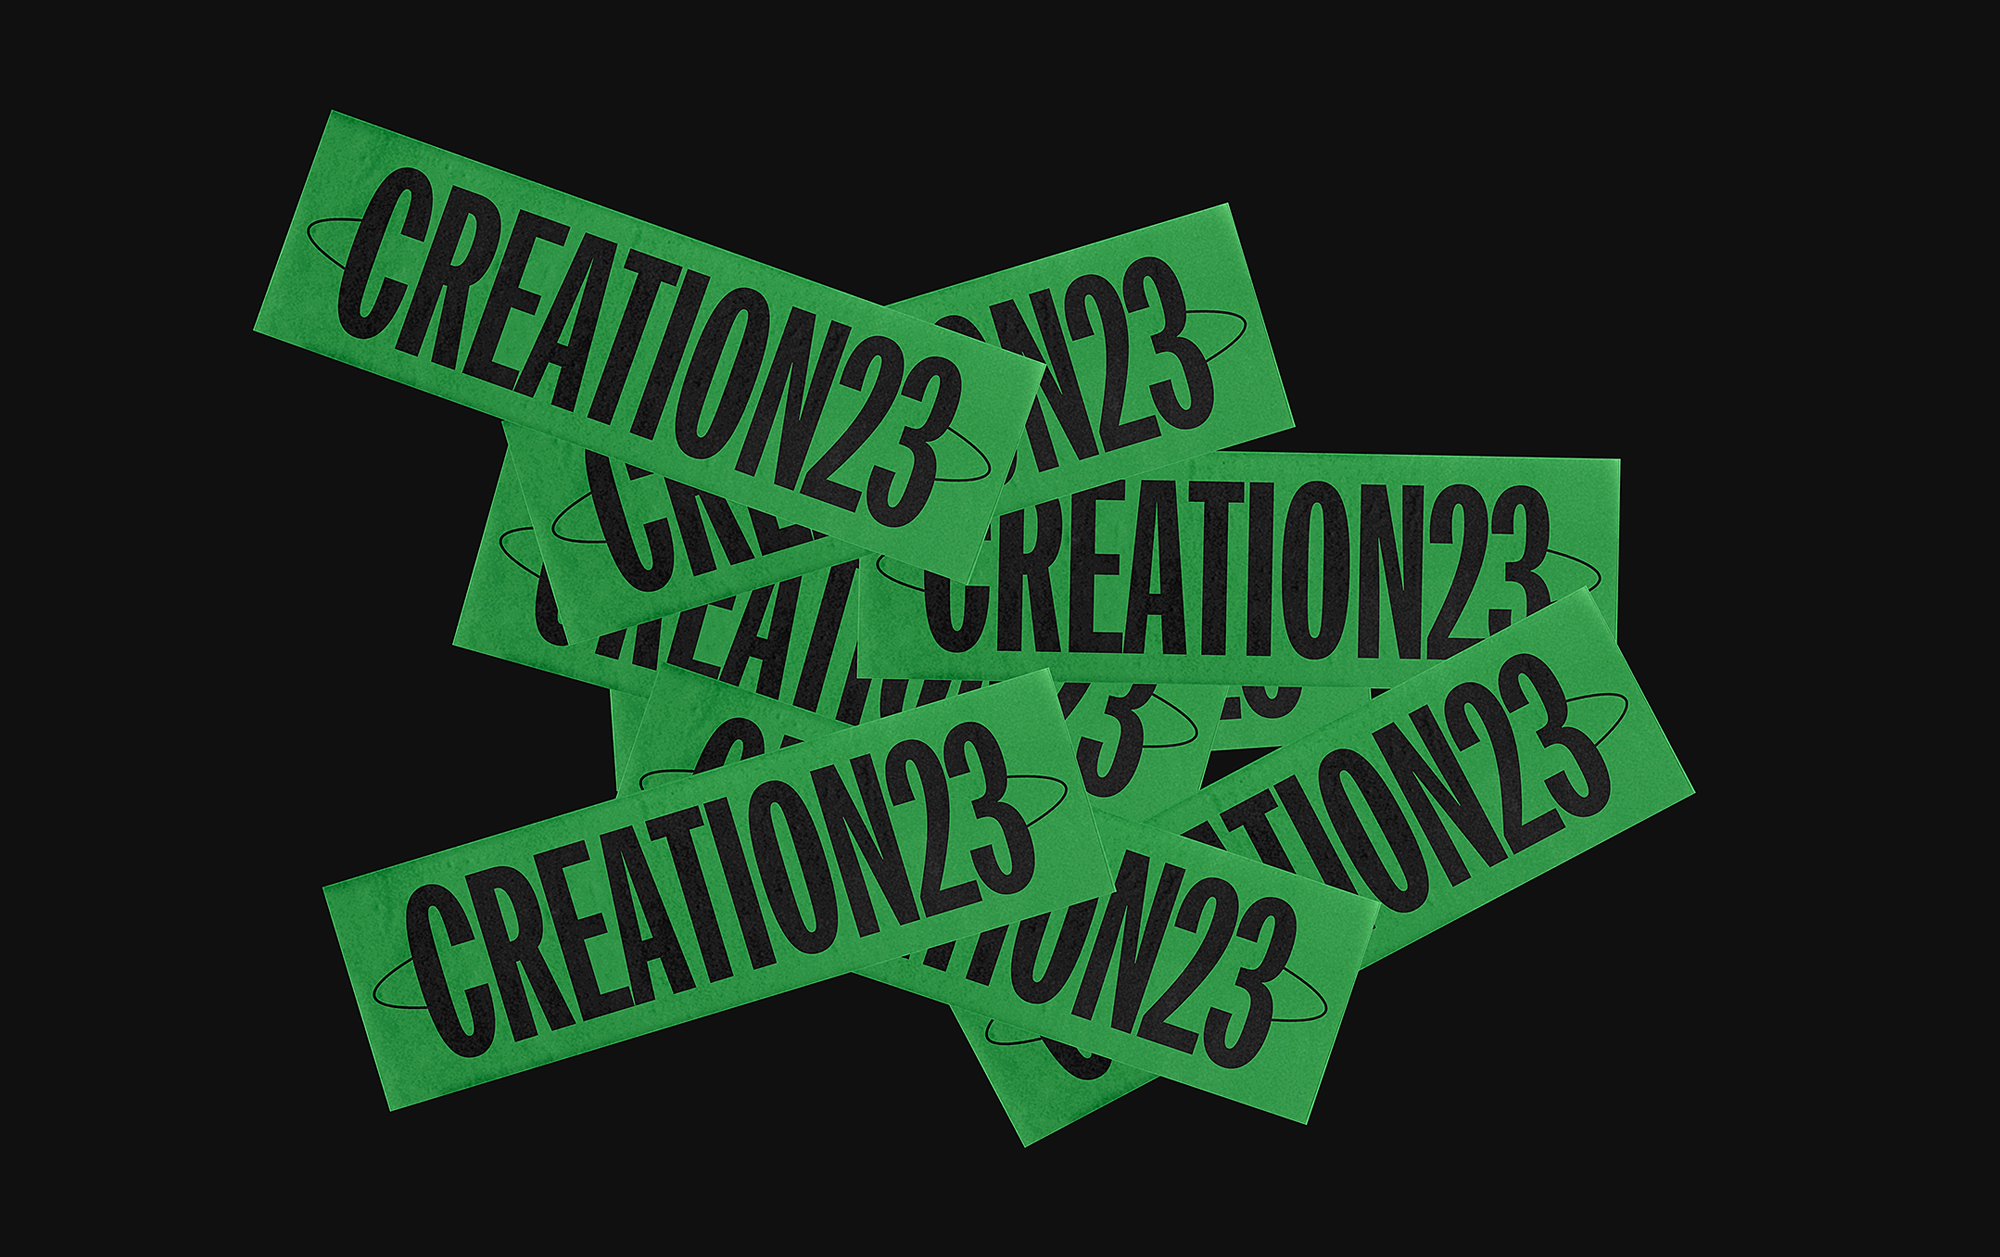 Creation23 5ok B